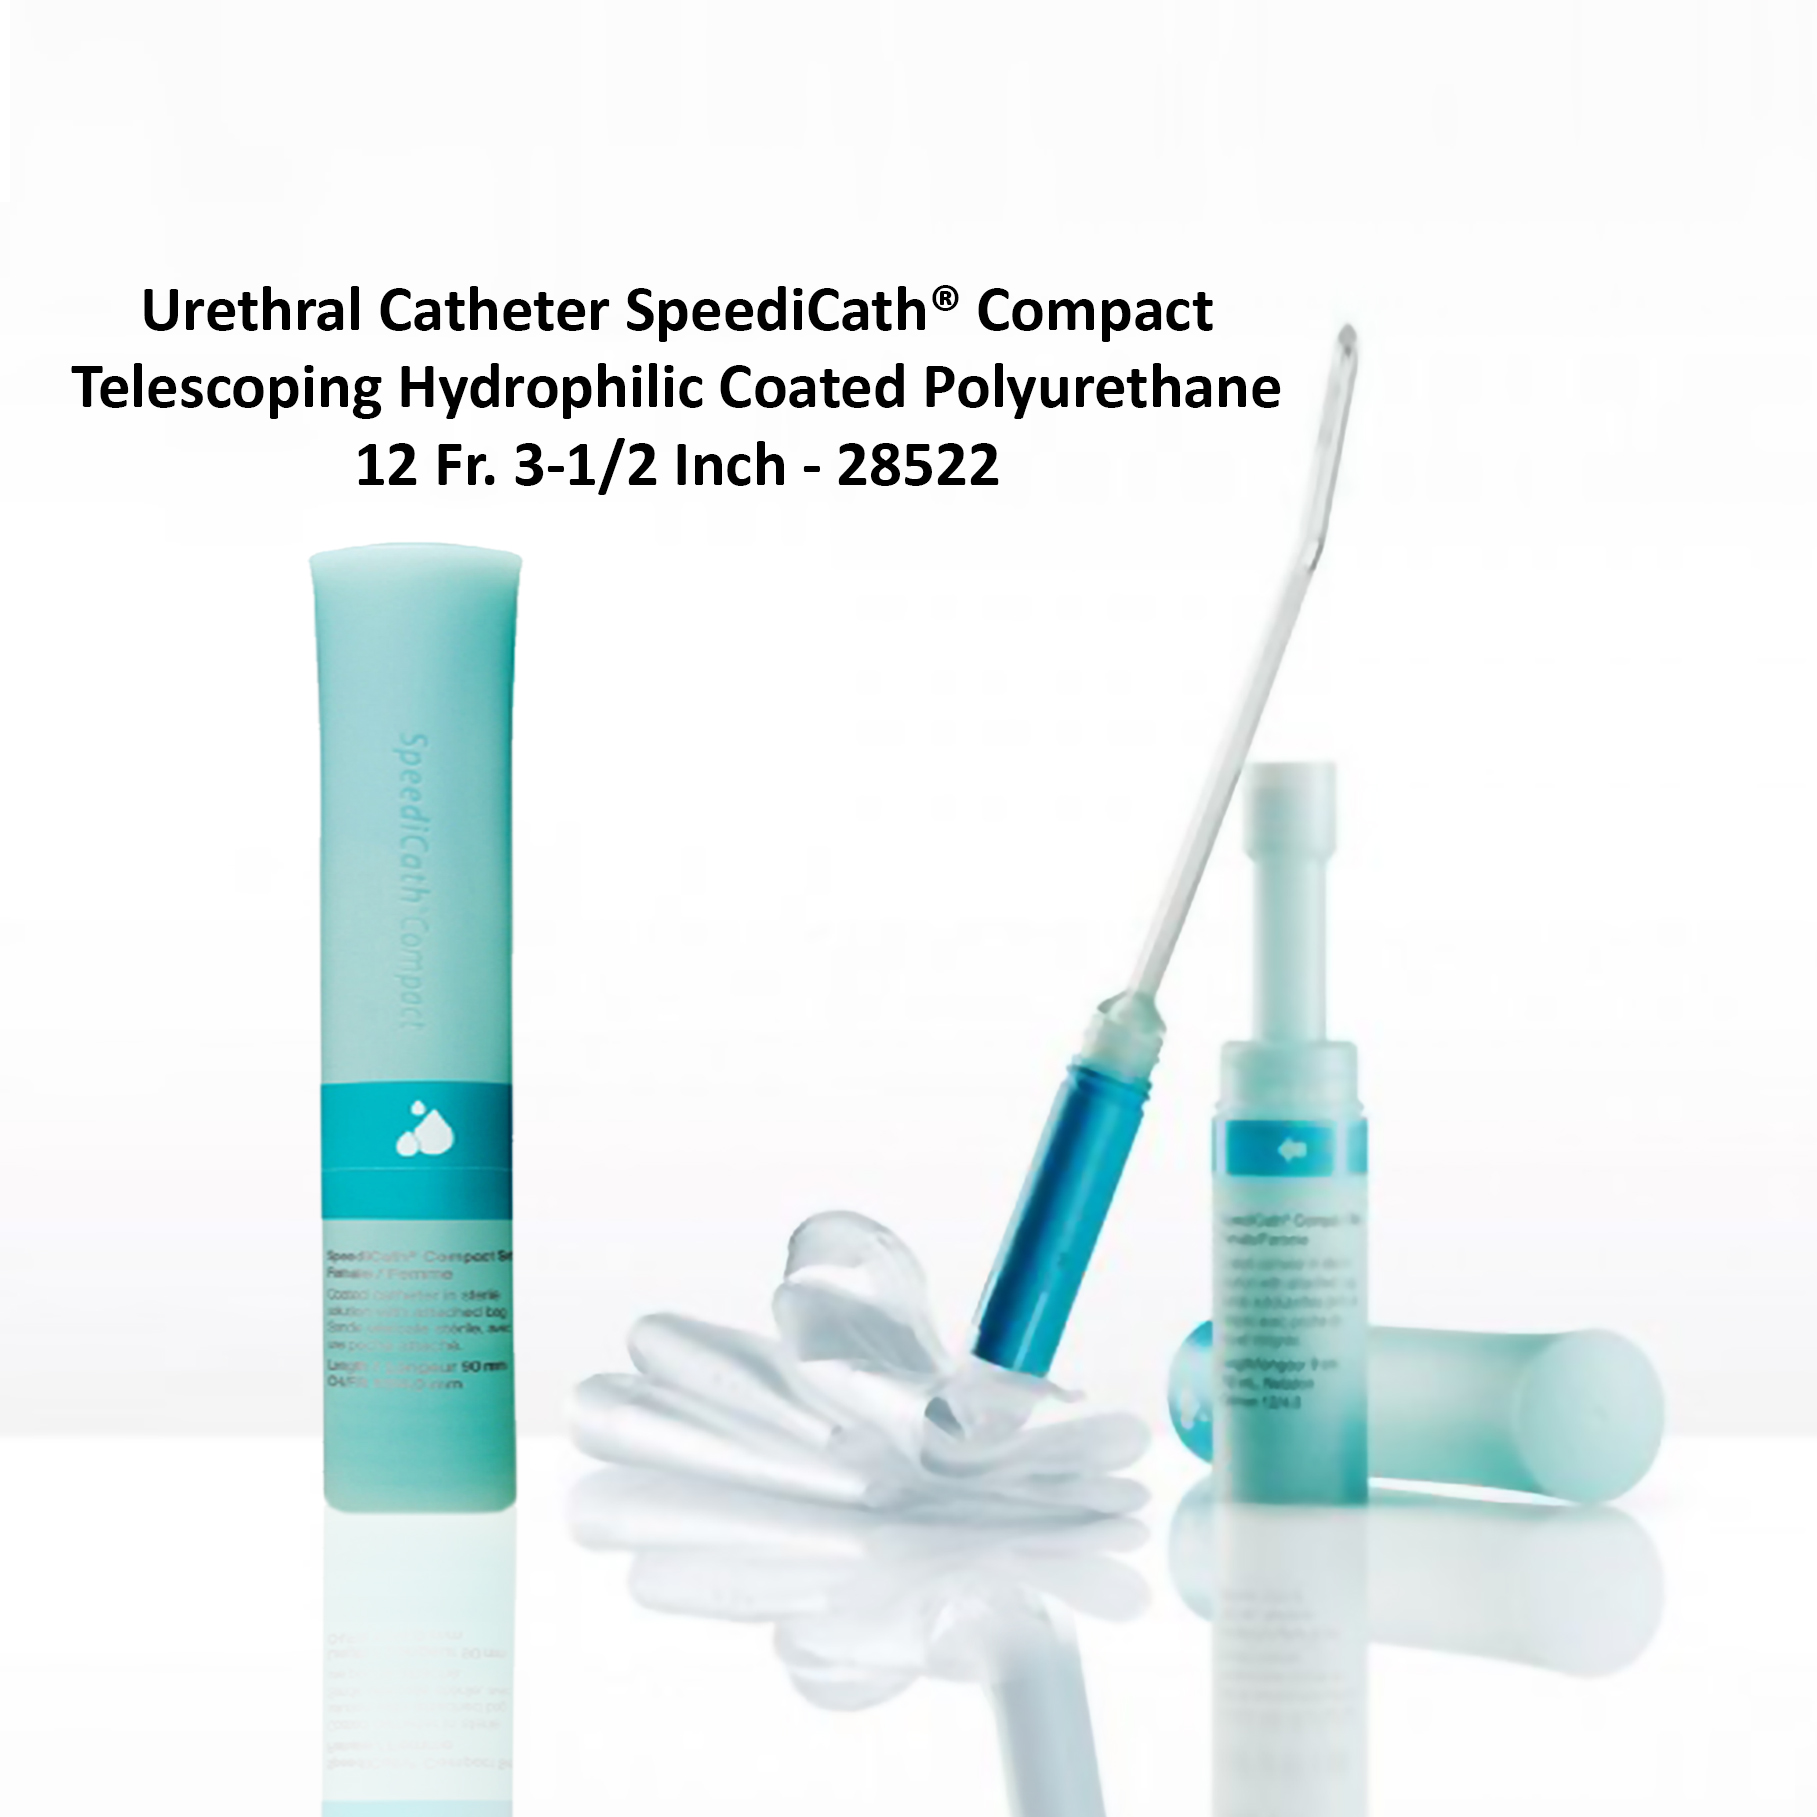 Urethral Catheter SpeediCath® Compact Telescoping Hydrophilic Coated Polyurethane 12 Fr. 3-1/2 Inch - 28522